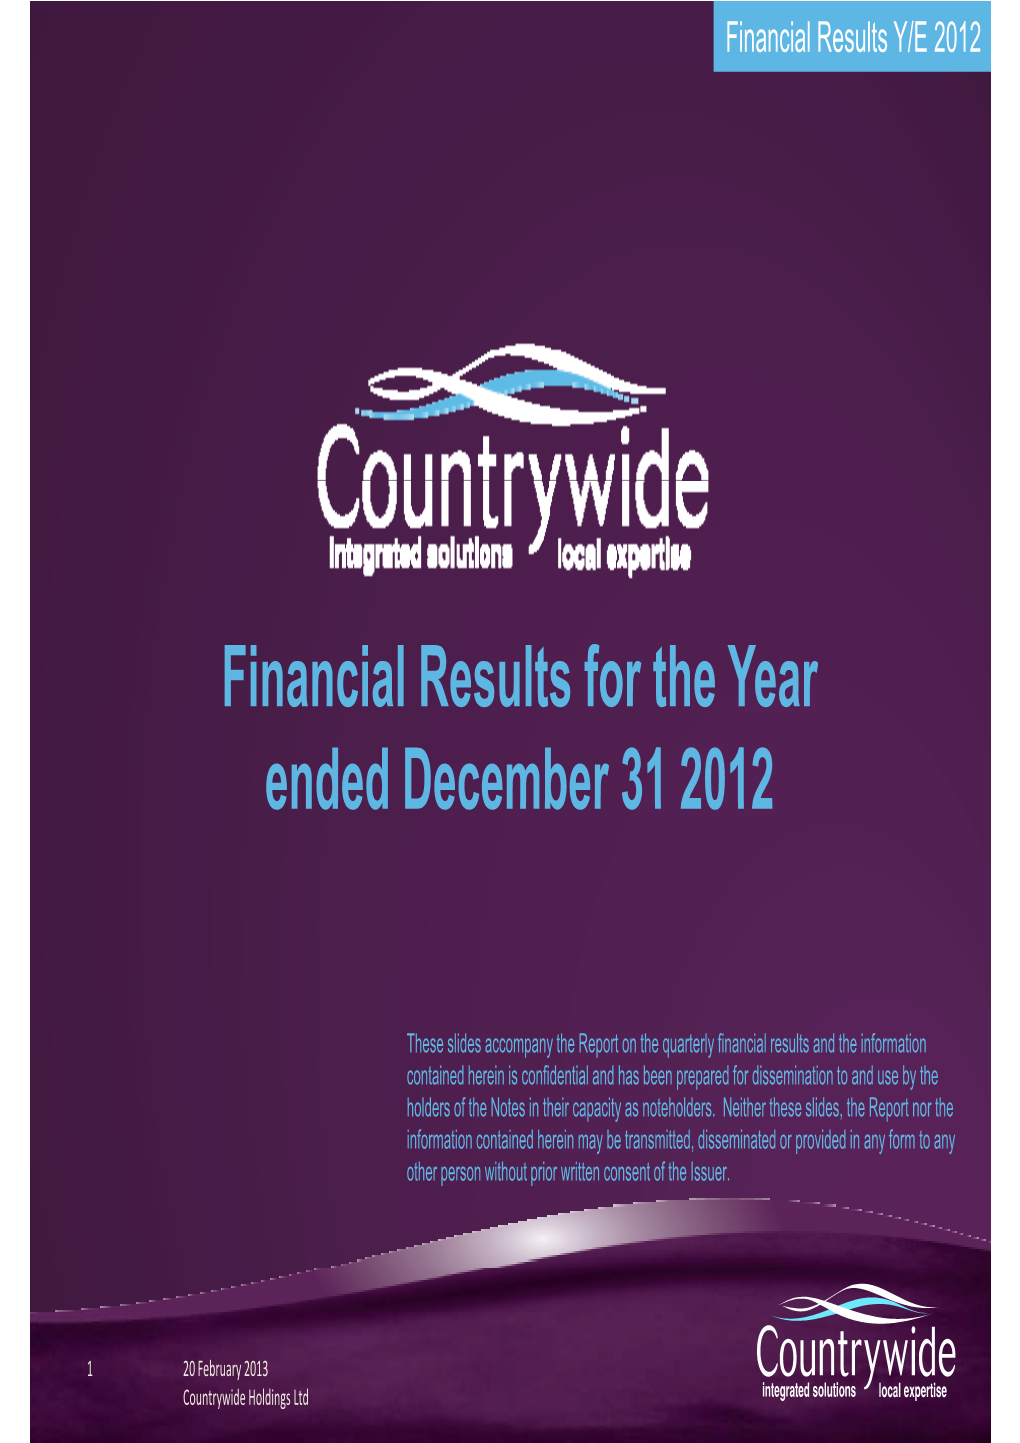 Annual Results Presentation 2012